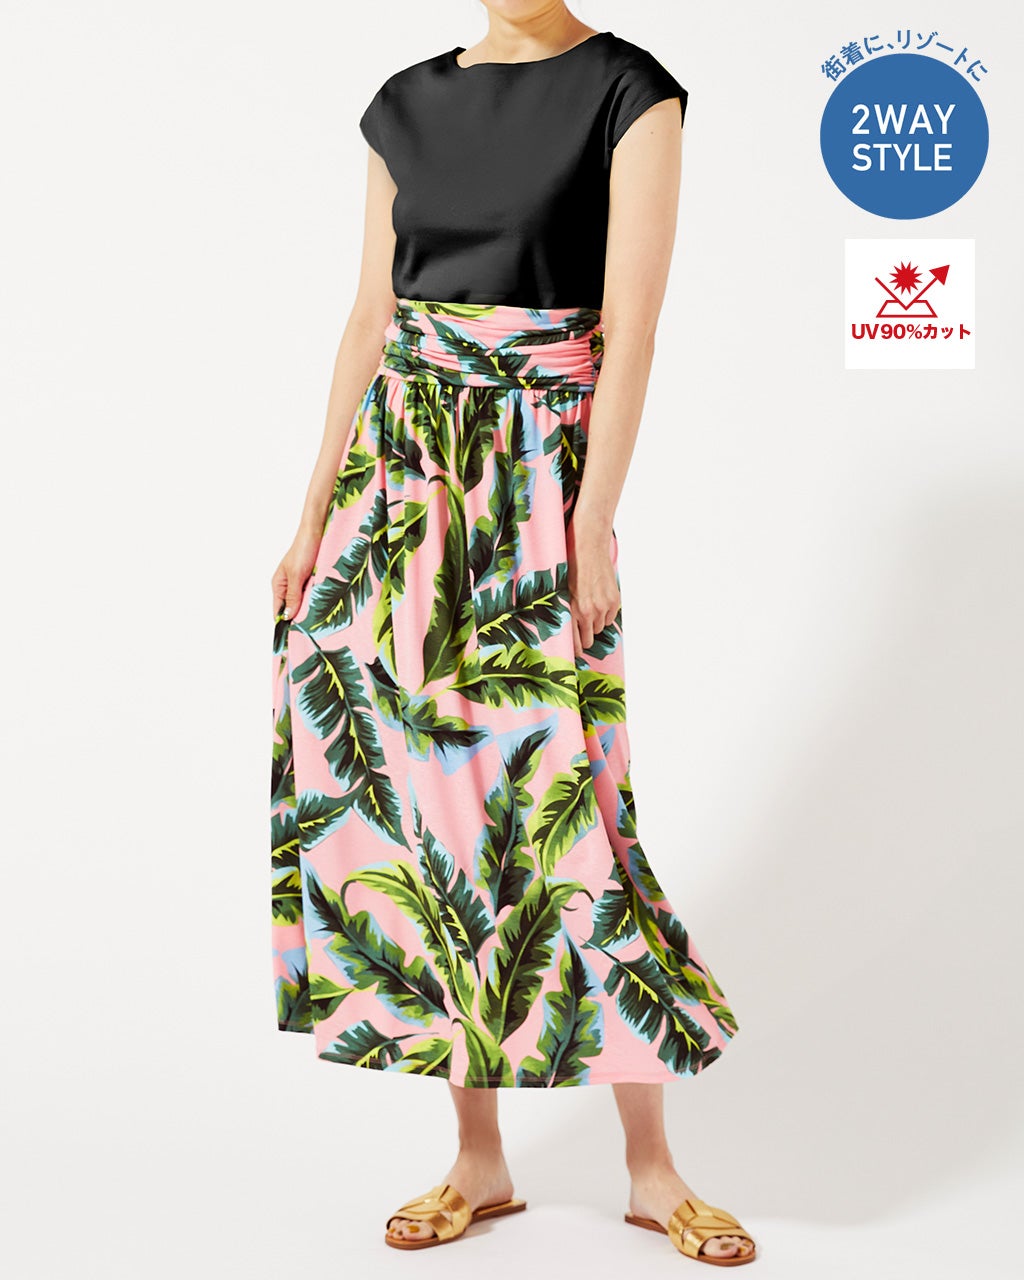 UVスラブ・2WAYワンピスカート/40代50代からのレディースファッション